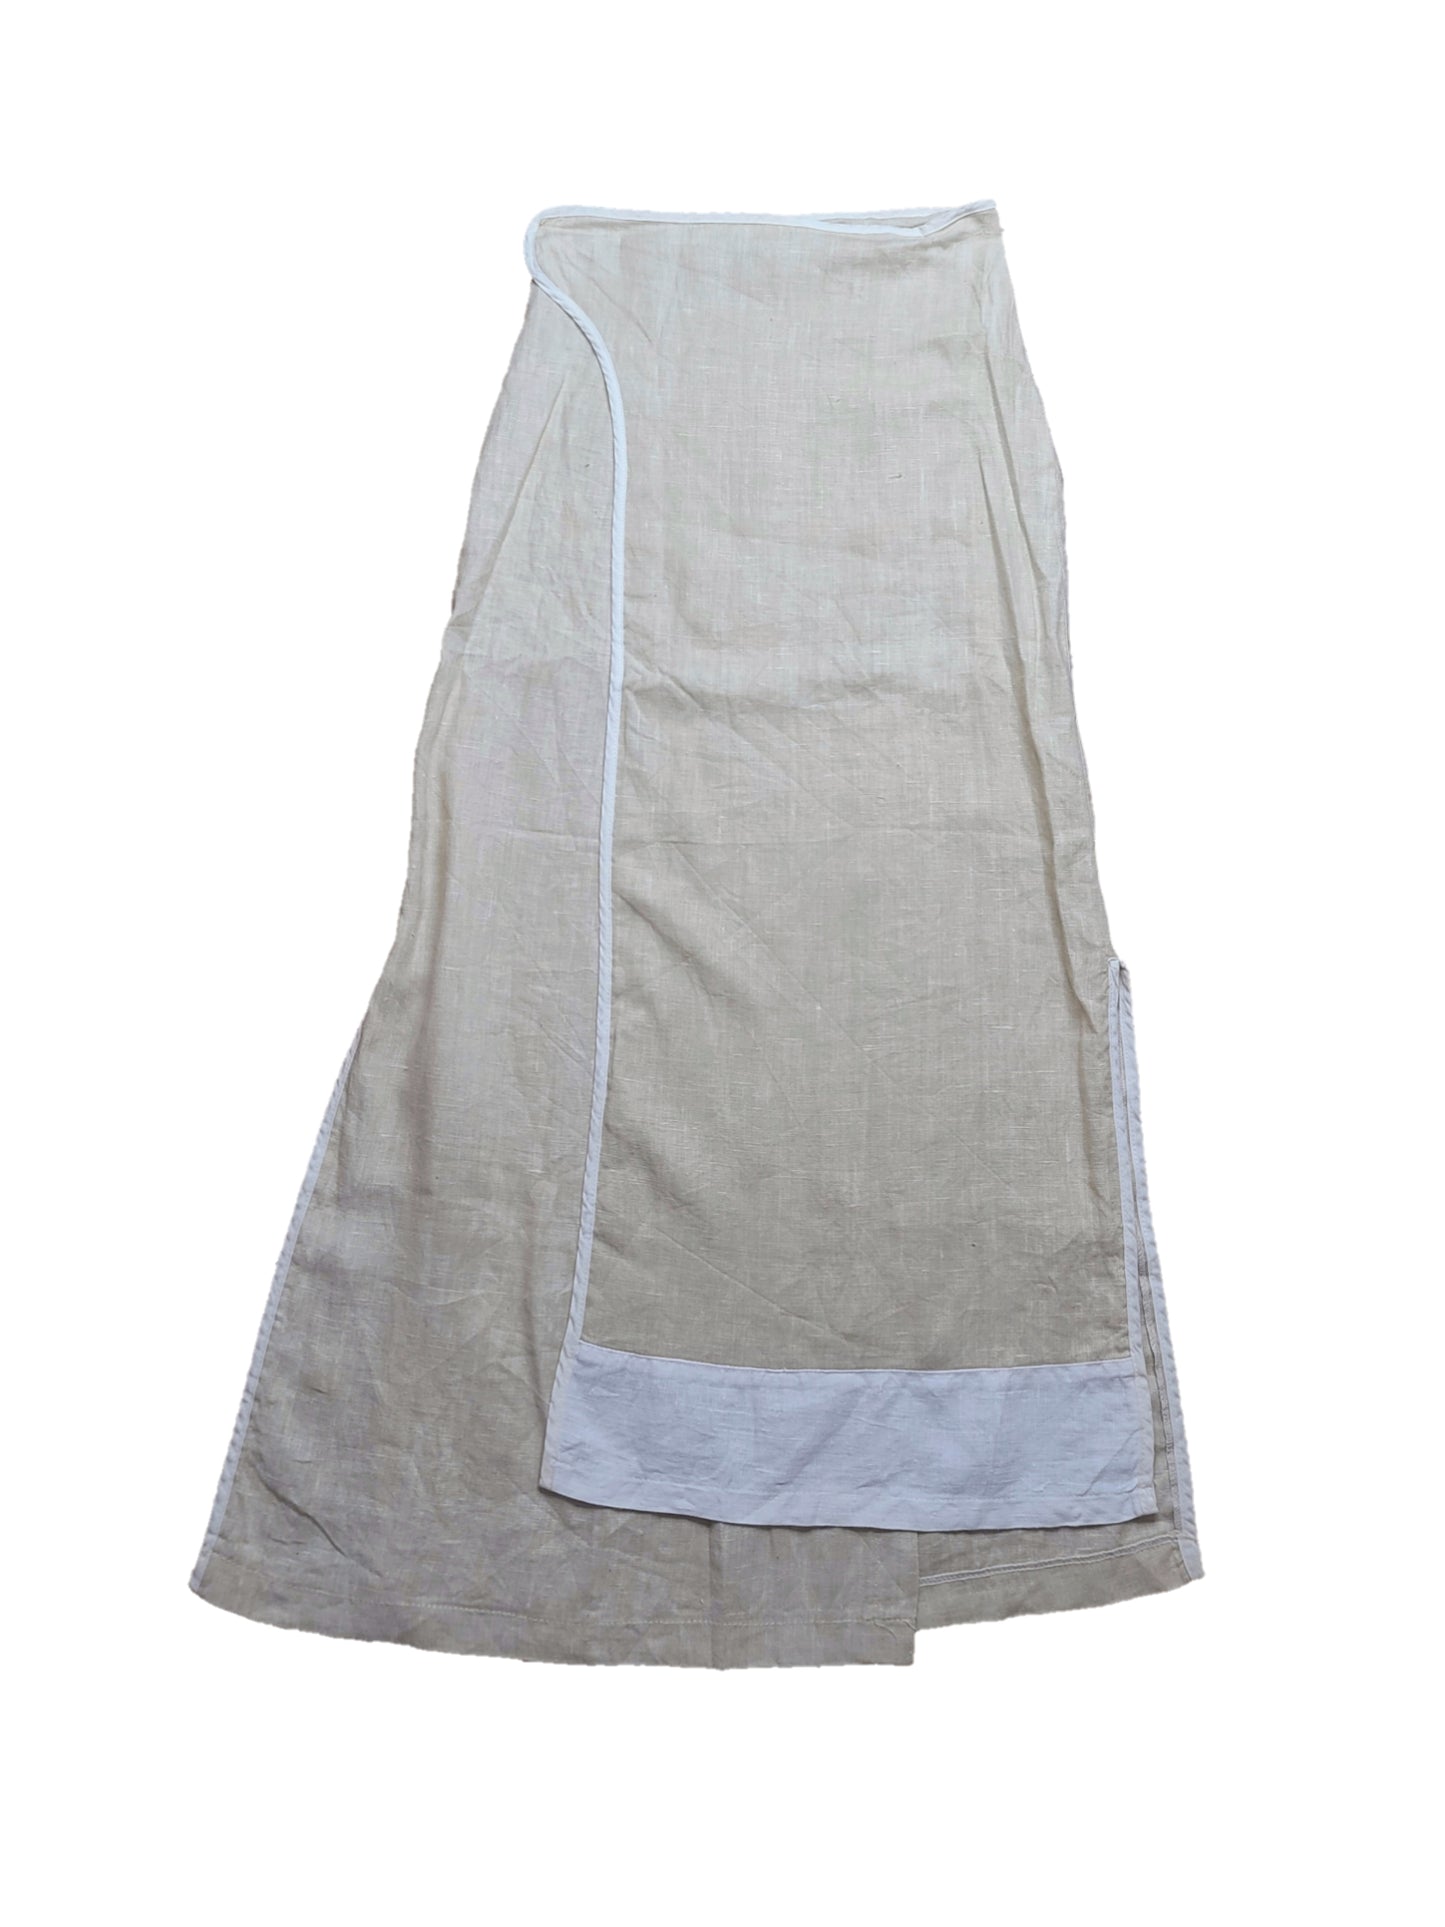 Long skirt vintage futuristic subversive basics harajuku beige neutral style japan lin france paris jupe longue cybery2k